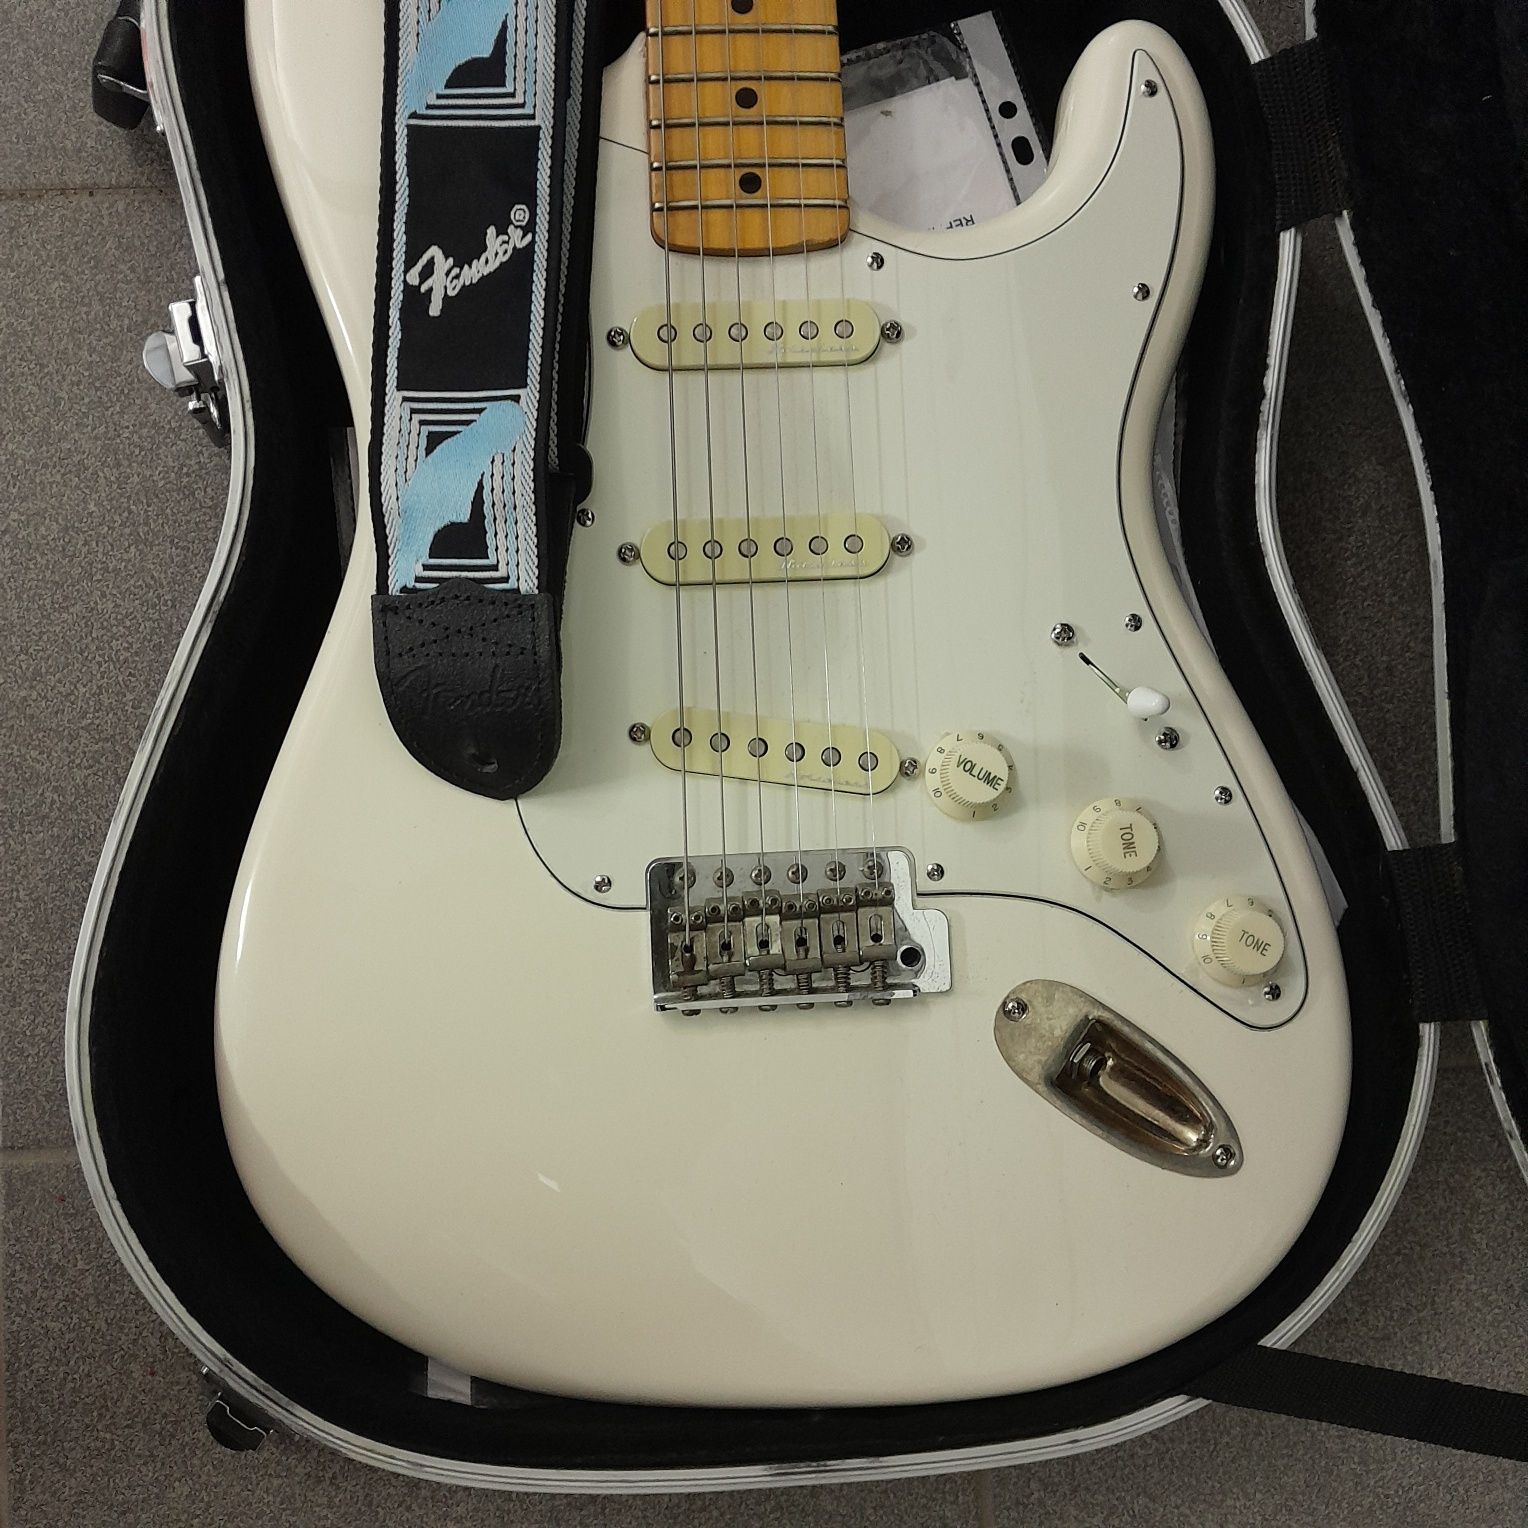 Gitara elektryczna Fender Squier vibe Stratocaster cena do nego